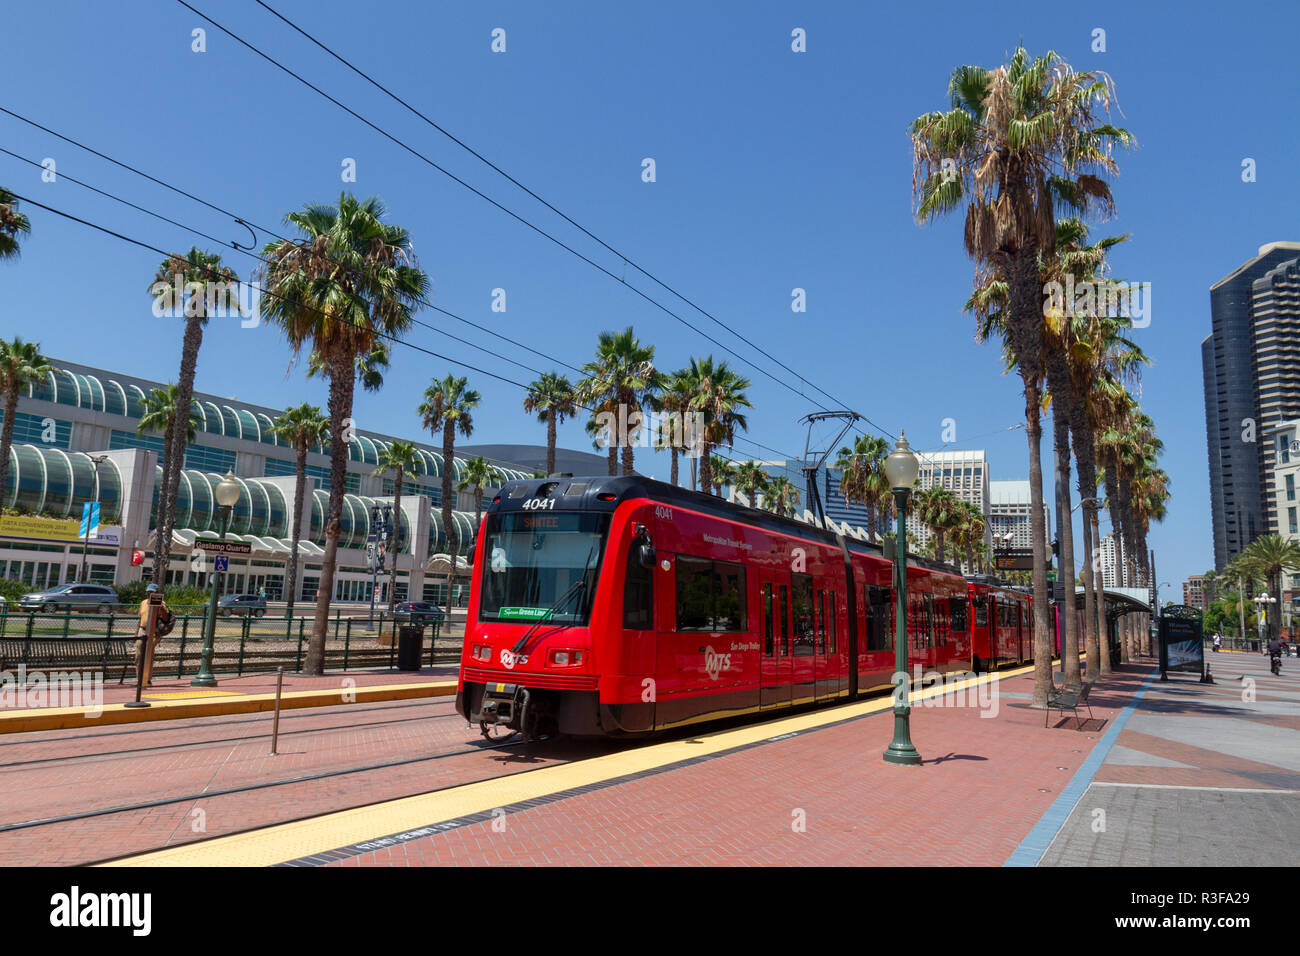 A Green Line train passing through downtown San Diego, California, United States. Stock Photo